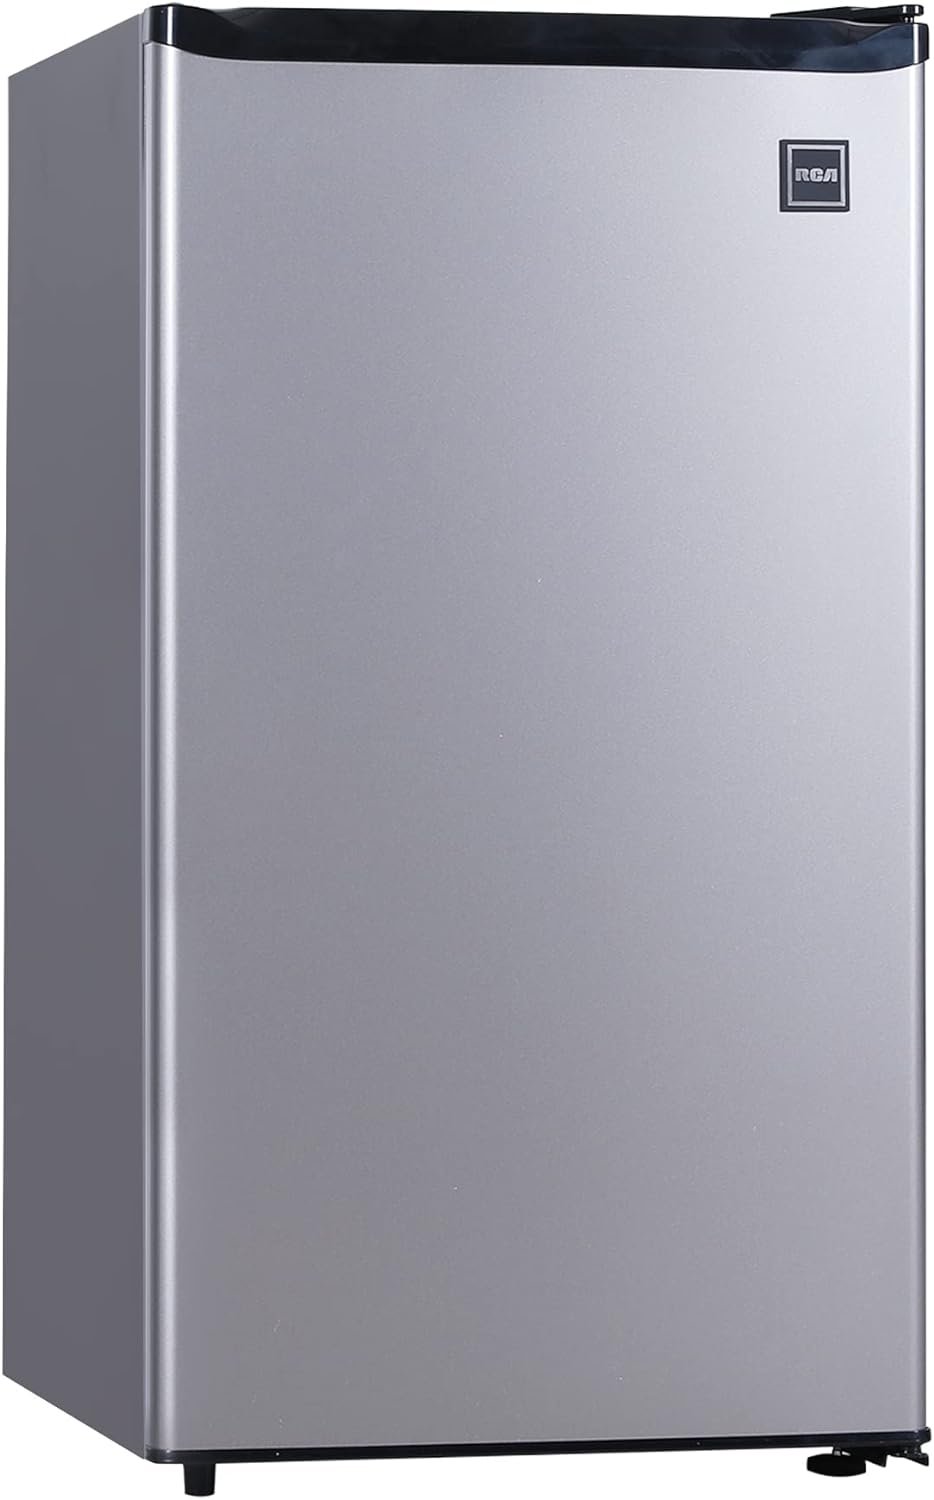 Best Mini Refrigerator, Compact Freezer Compartment,